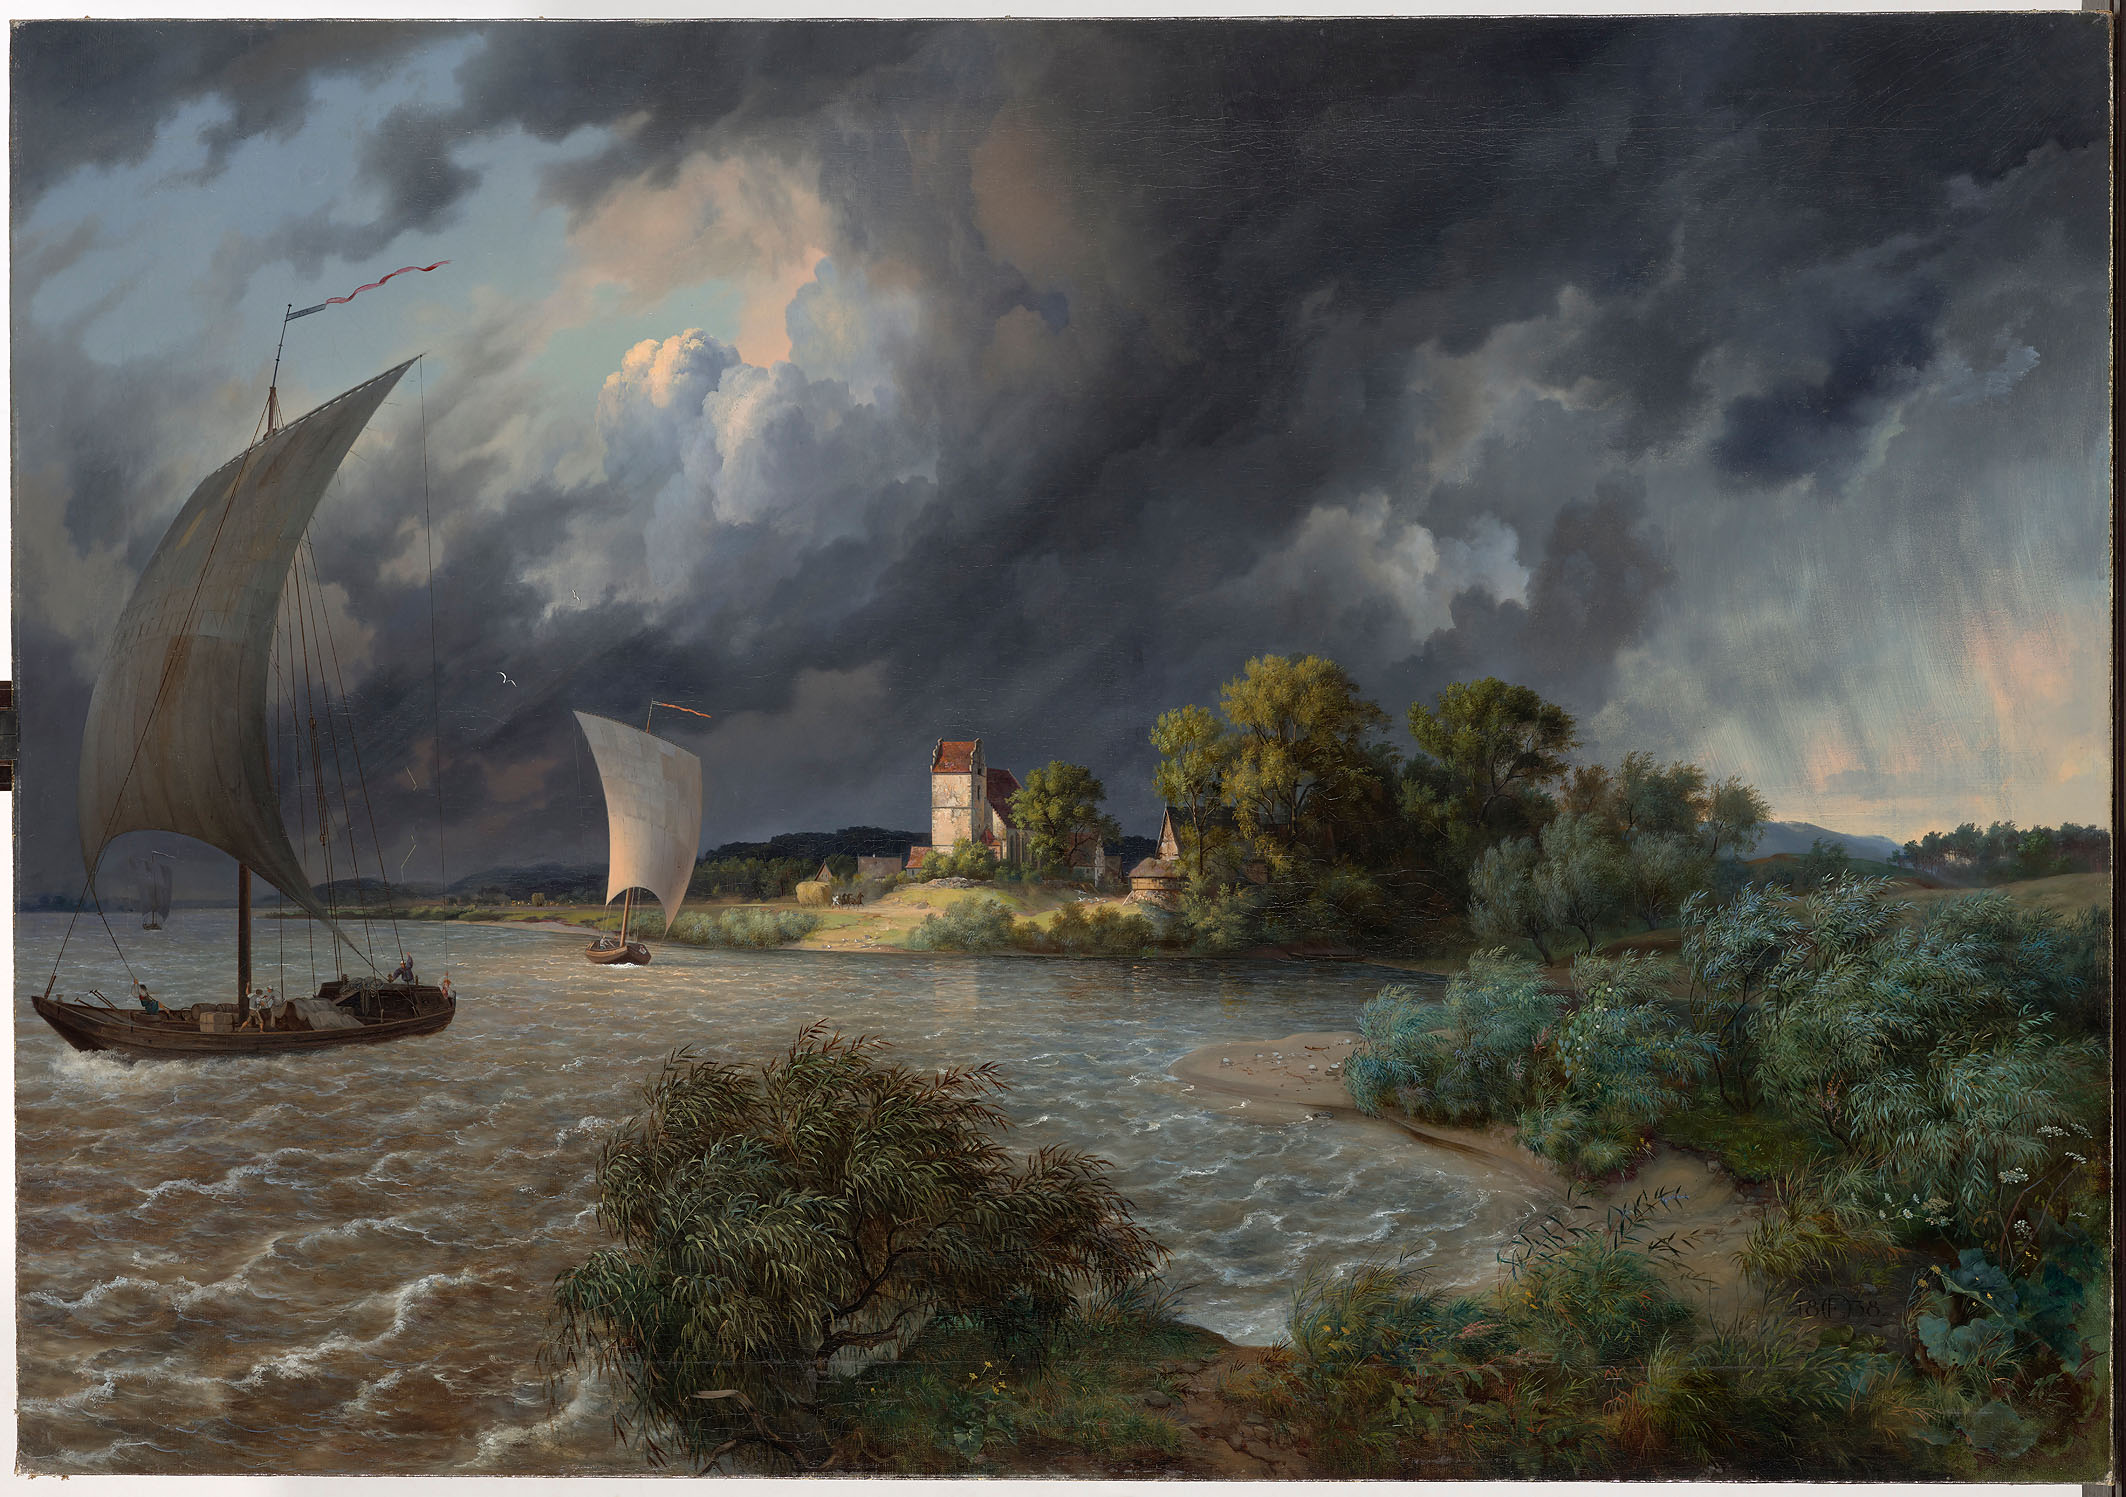 Kaditz Köyü Bölgesinde Fırtına (orig. "Thunderstorm in the Area of the Village Kaditz") by Ernst Ferdinand Oehme - 1838 - 99 x 142 cm 